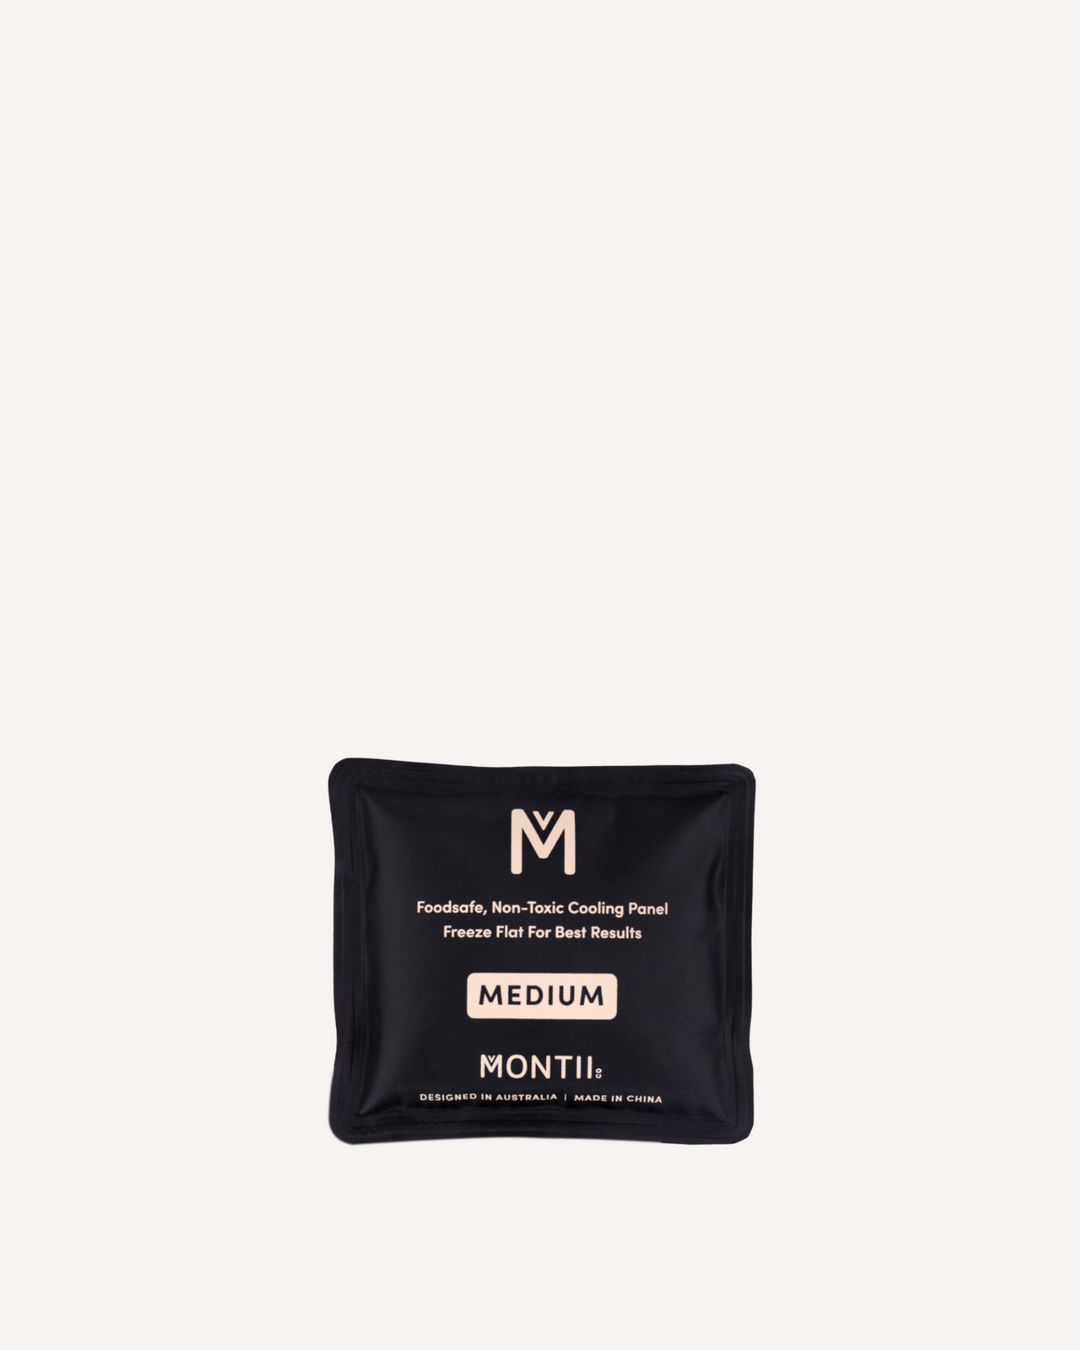 MontiiCo Ice Pack - Medium